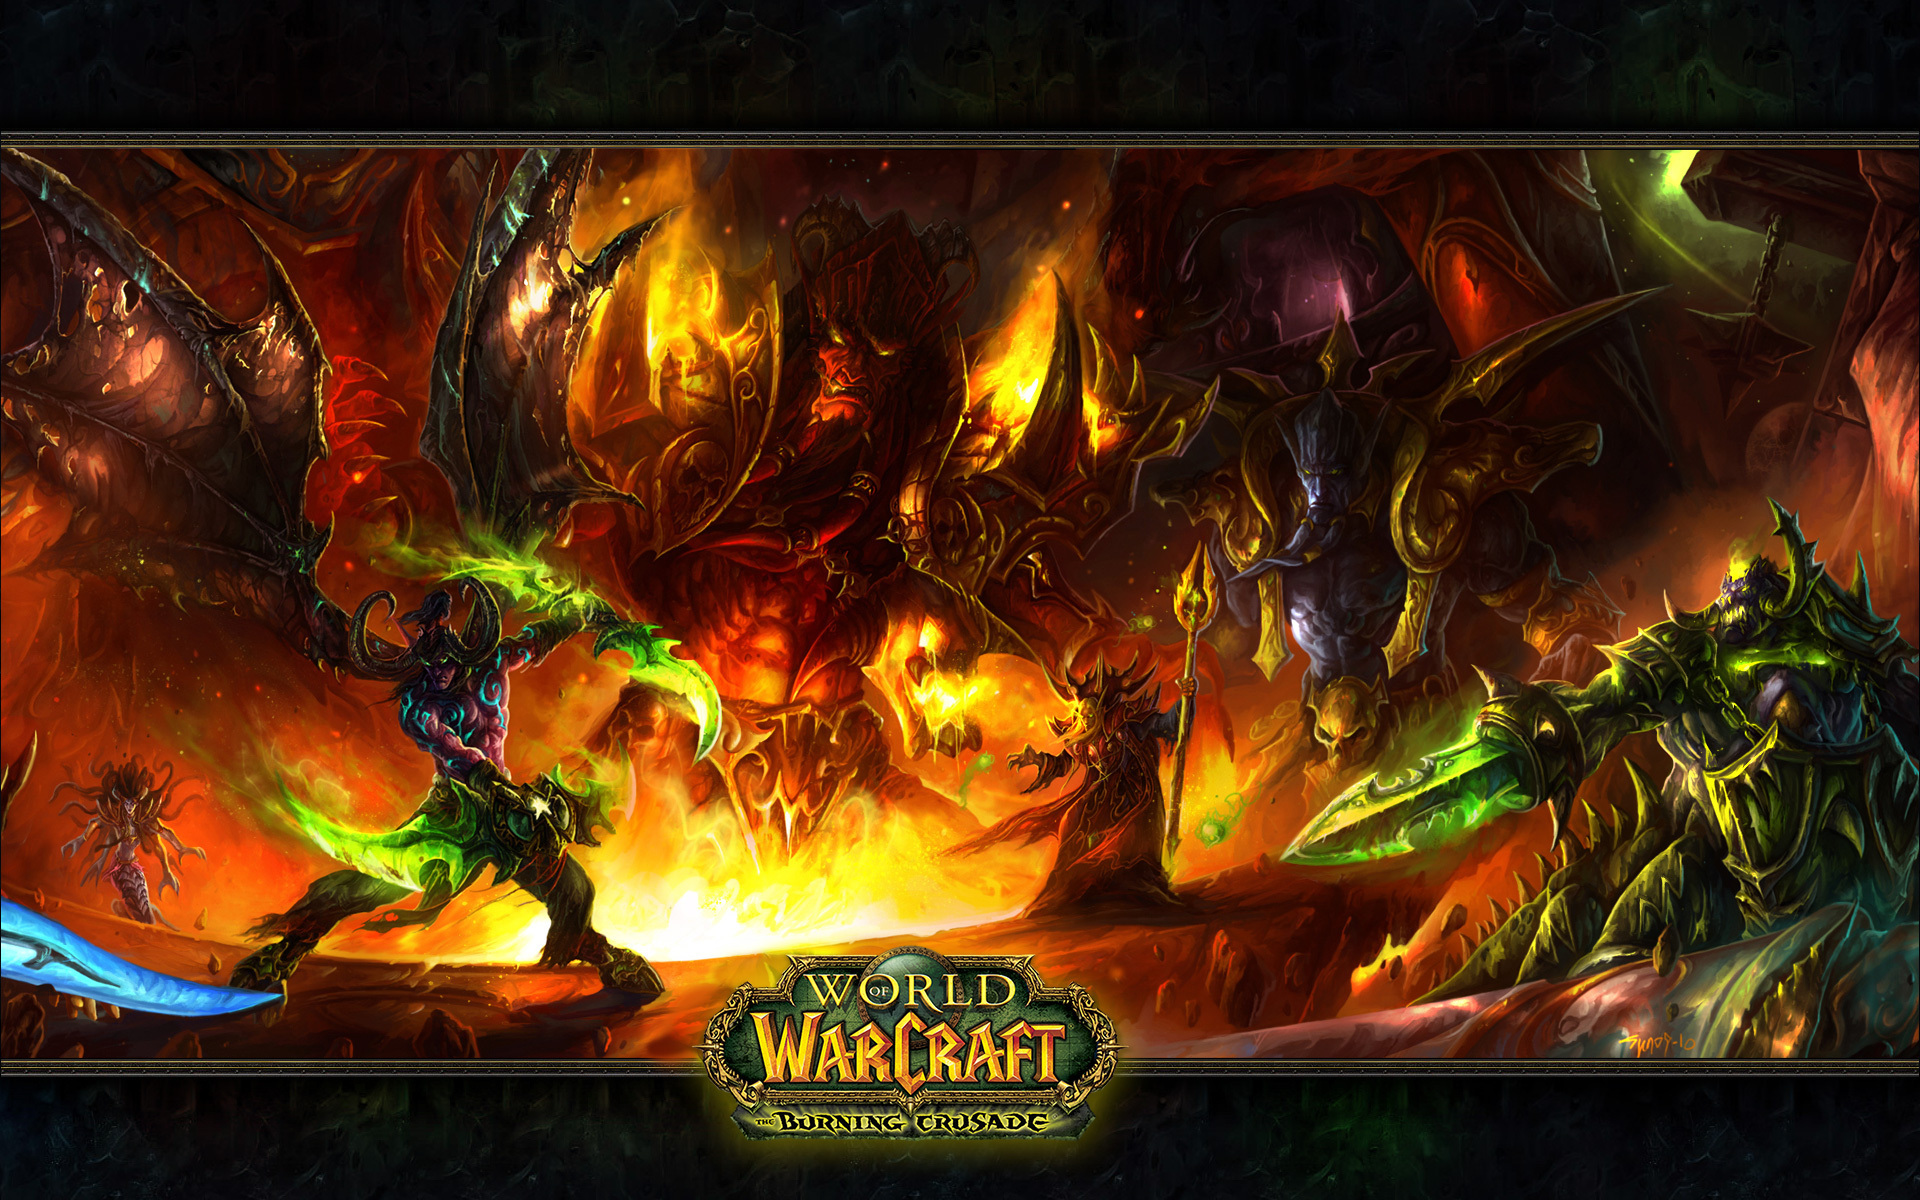 General 1920x1200 World of Warcraft video games demon wizard fantasy art Warcraft PC gaming Burning Crusade Blizzard Entertainment